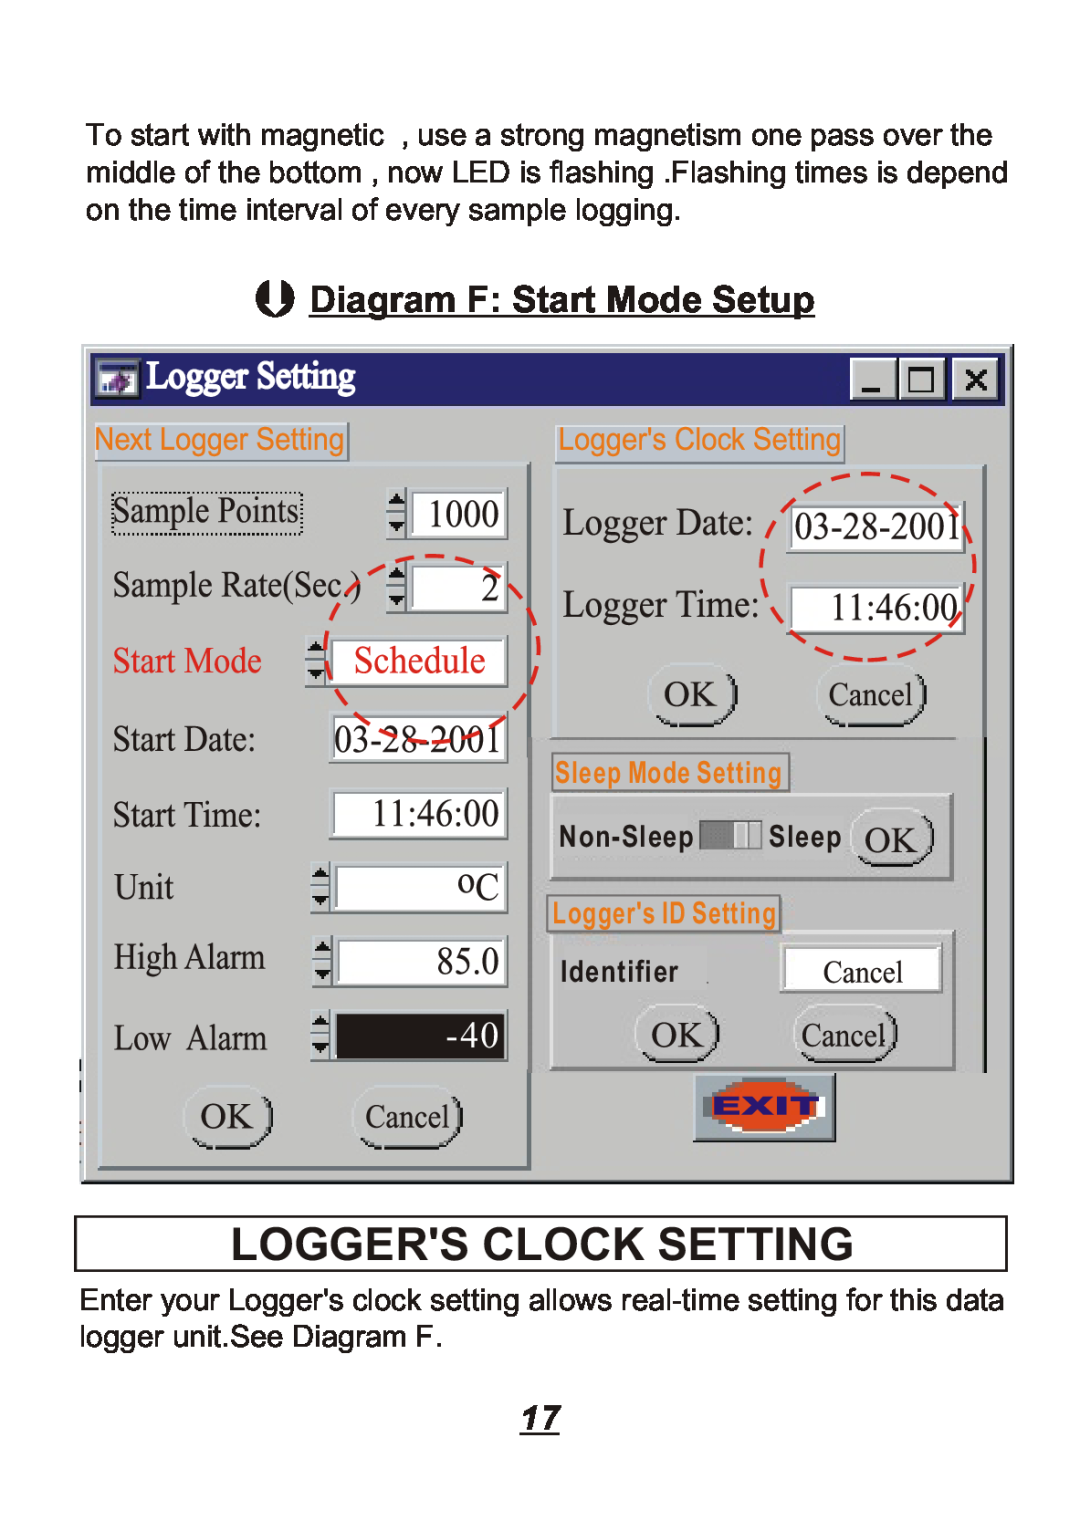 Omega Engineering OM8800D manual Loggers Clock Setting, Diagram F Start Mode Setup, Sleep Mode Setting, Loggers ID Setting 